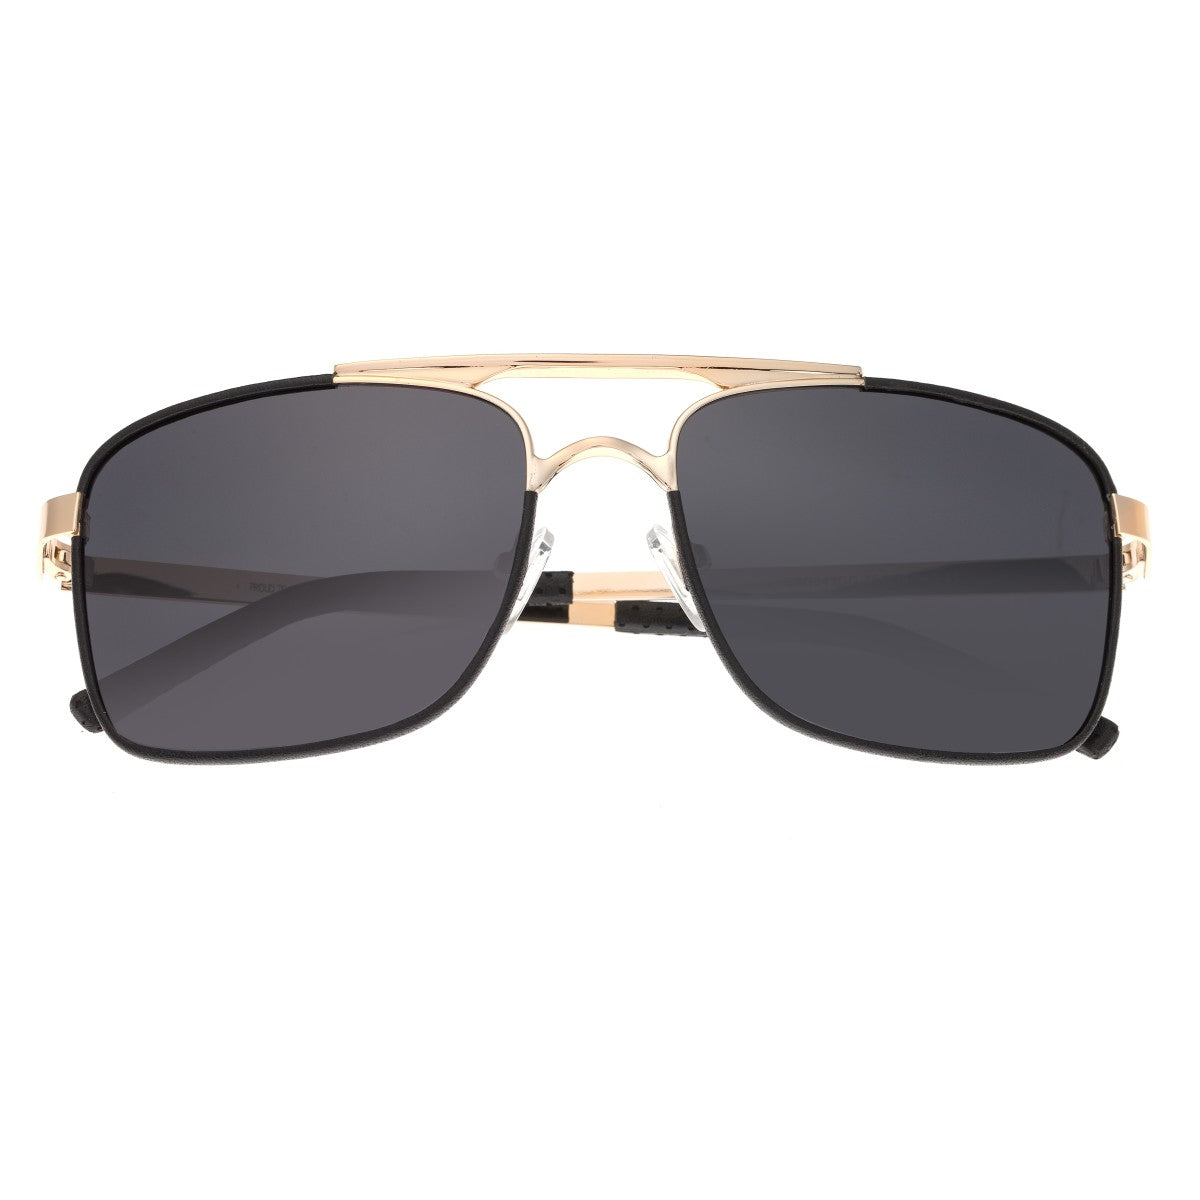 Breed Draco Polarized Sunglasses - Gold/Black - BSG047GD